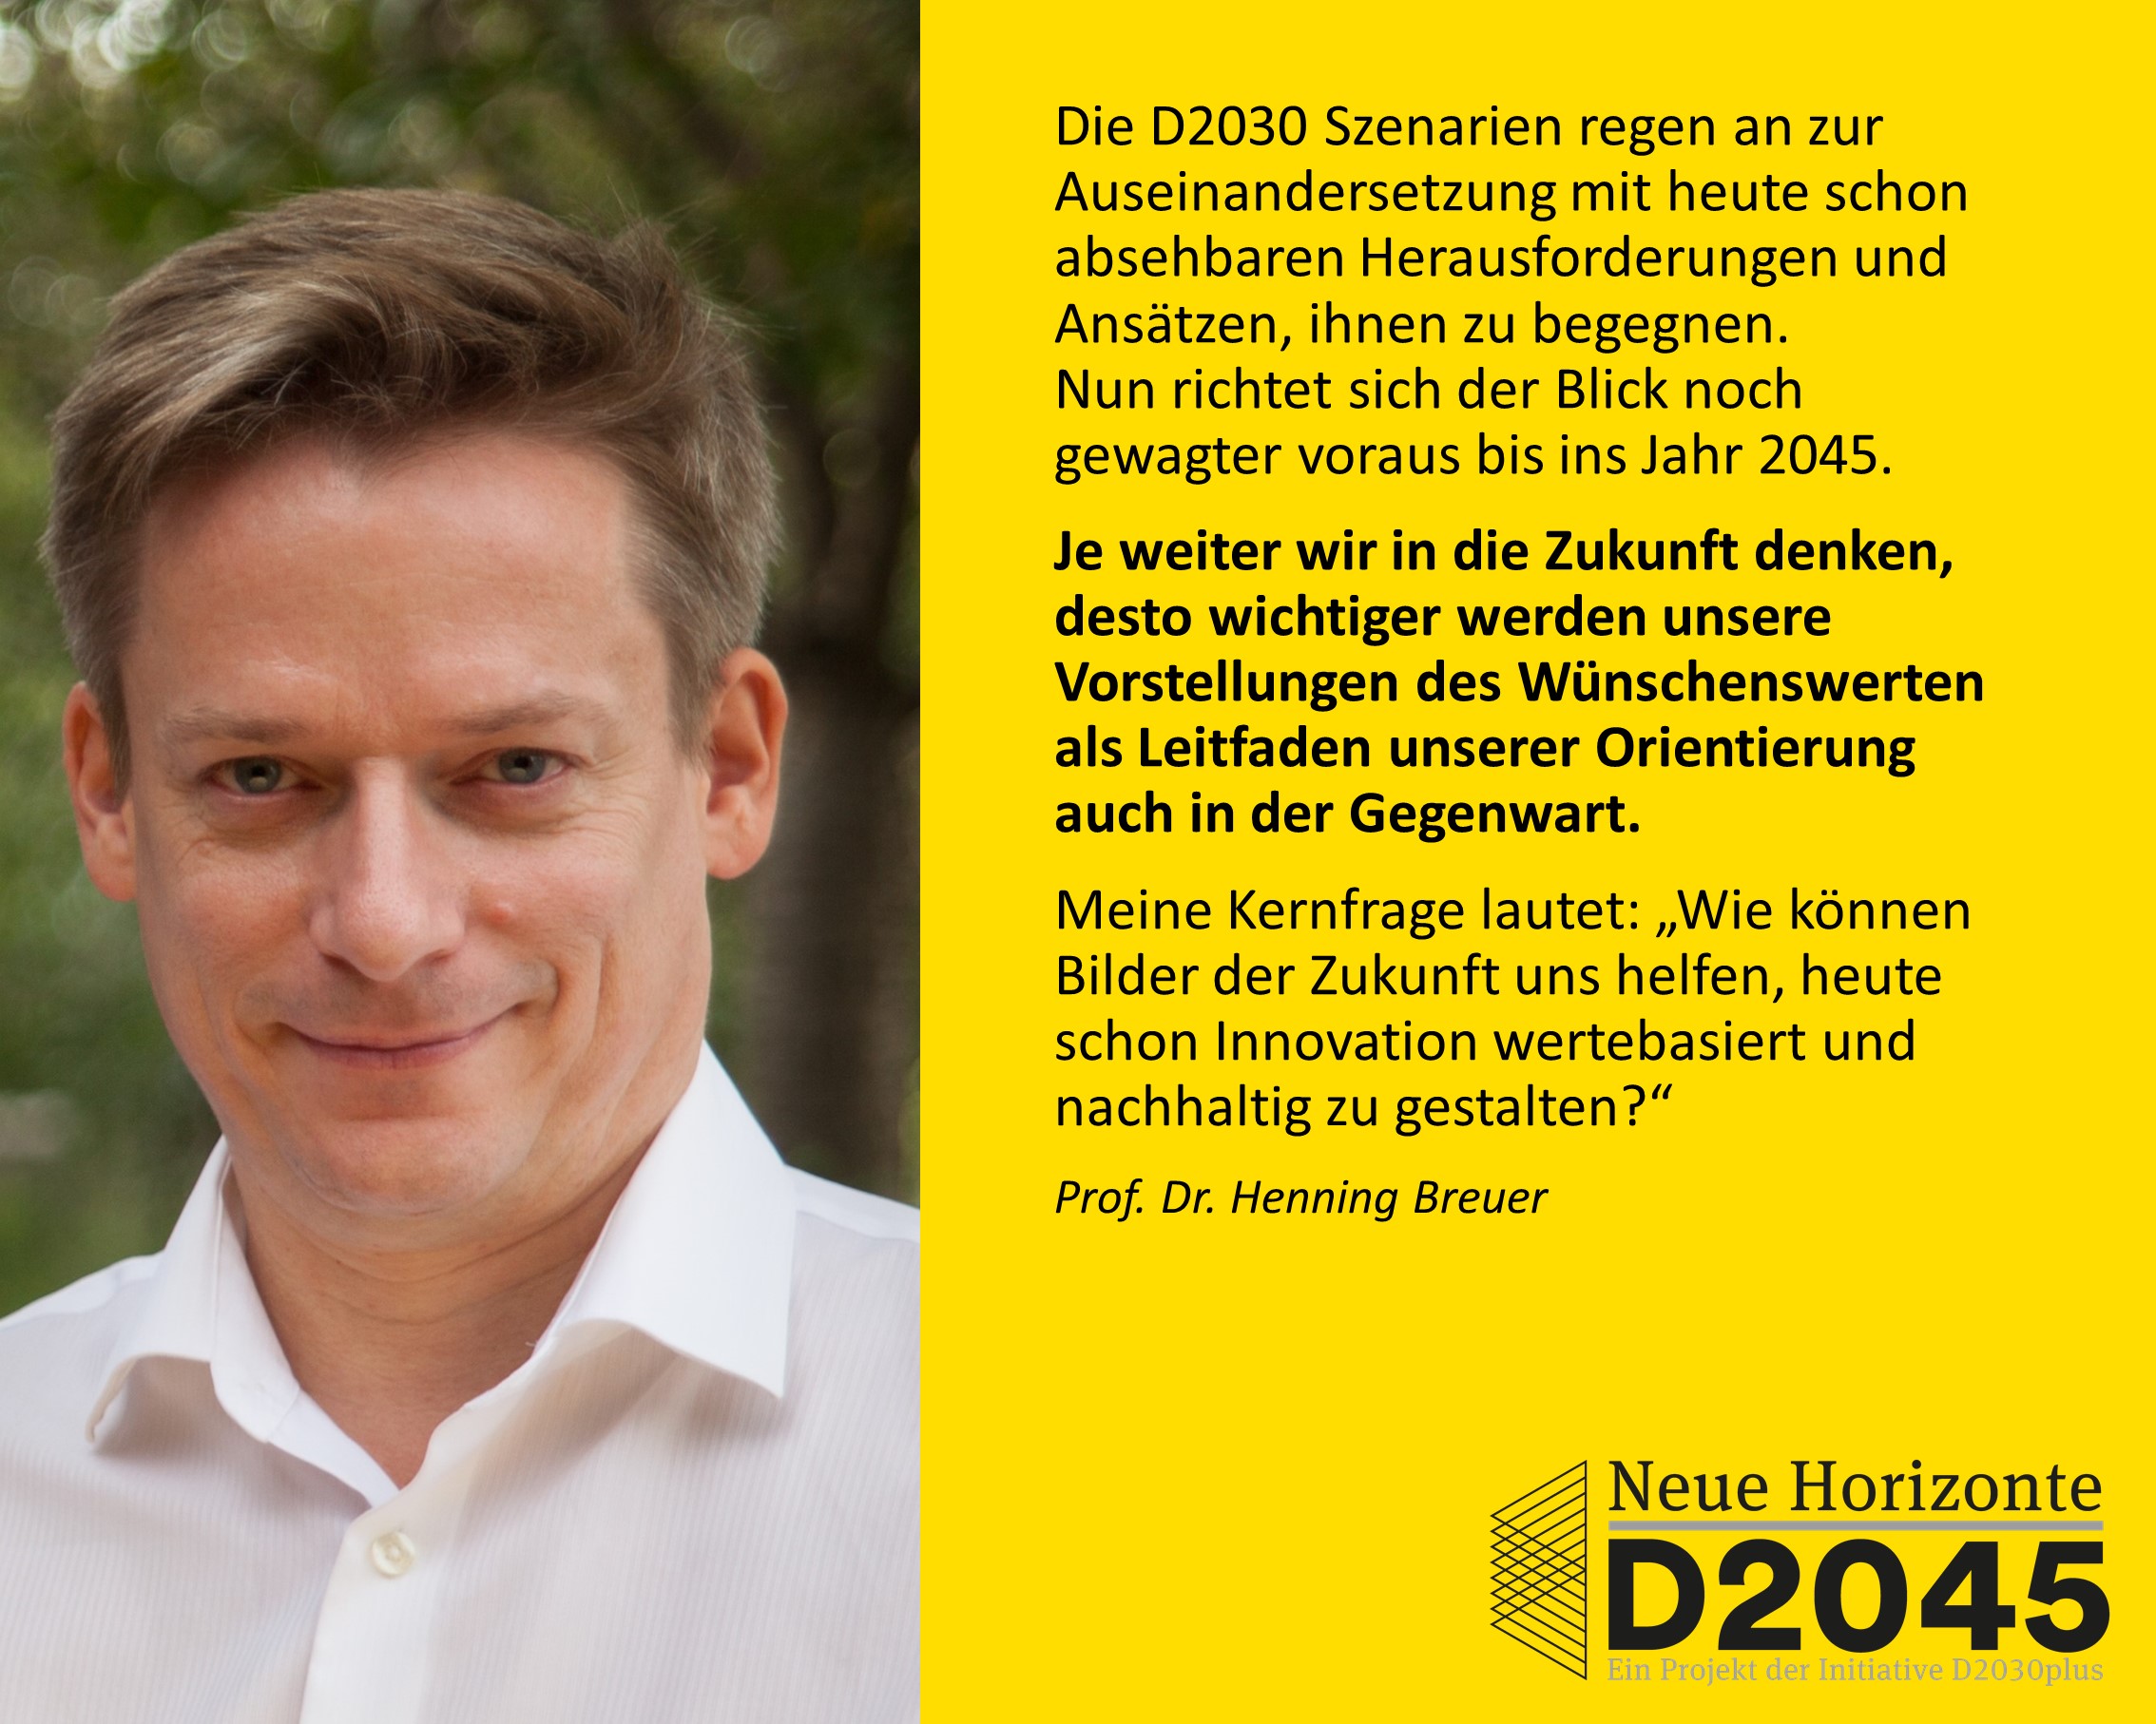 Prof. Dr. Henning Breuer, Zukunftsbotschafter der Initiative D2030